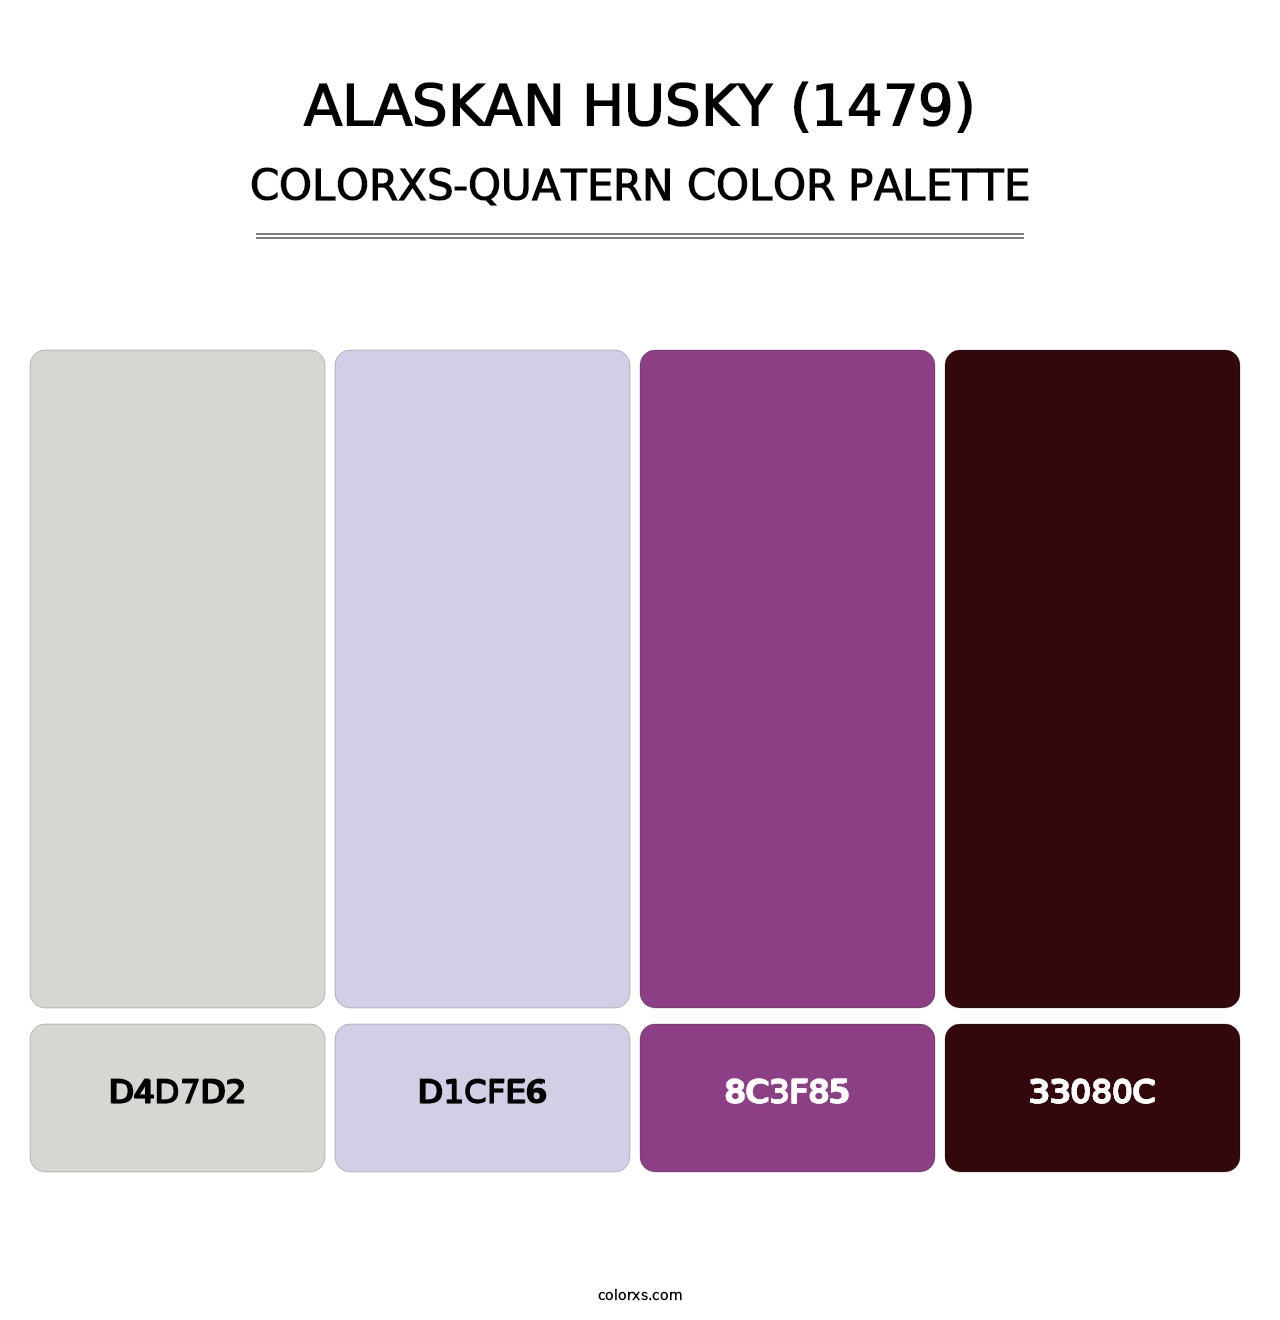 Alaskan Husky (1479) - Colorxs Quatern Palette